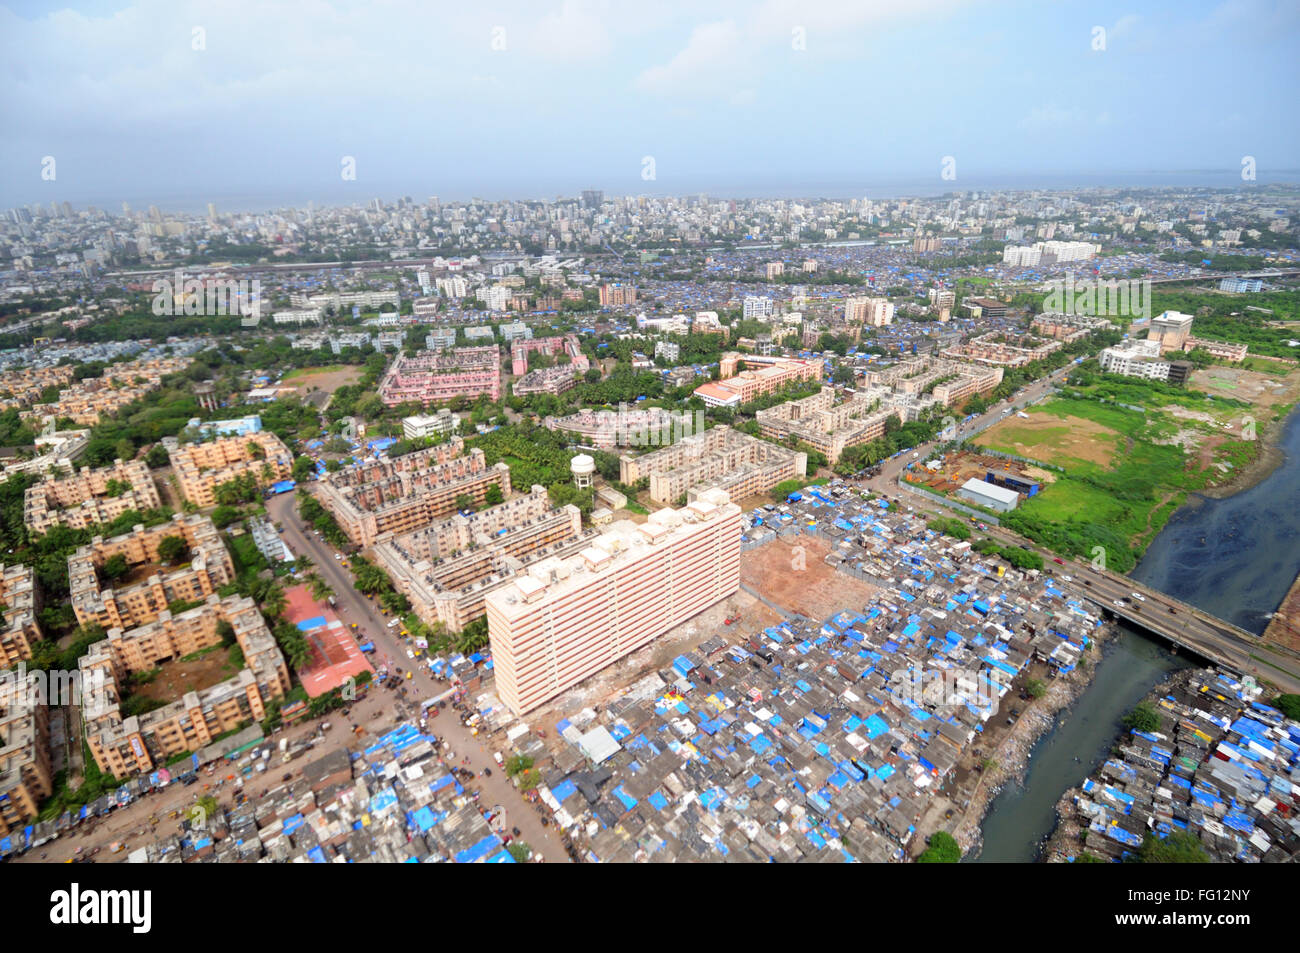 veduta aerea della colonia governativa ; baraccopoli ; ricchi poveri ; vecchi nuovi ; allora ora ; Bandra ; Khar ; Bombay ; Mumbai ; Maharashtra ; India Foto Stock